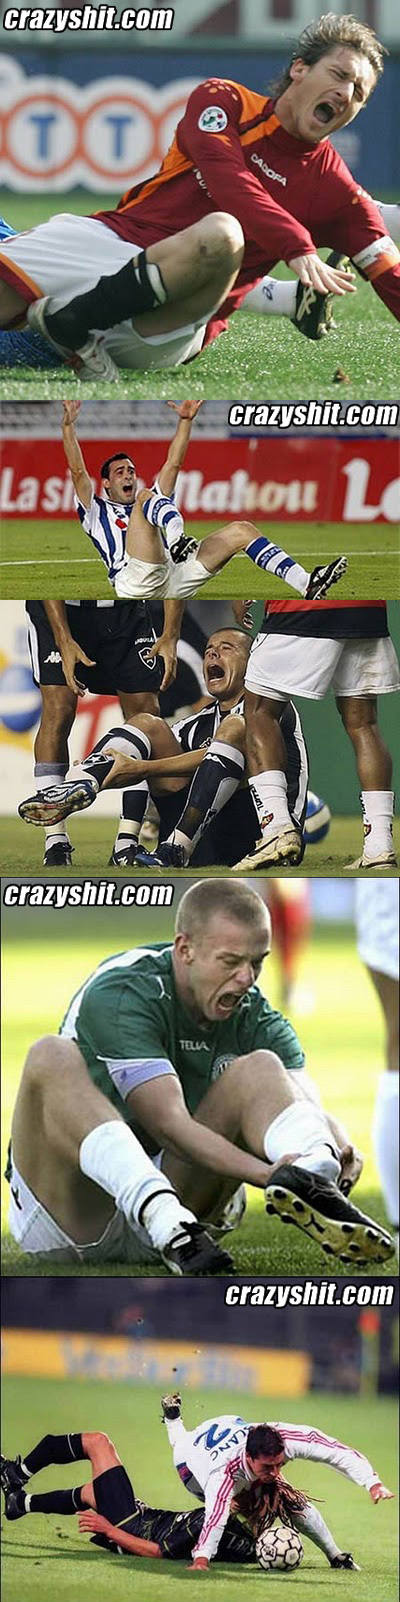 Sassy Soccer Players Break Their Legs